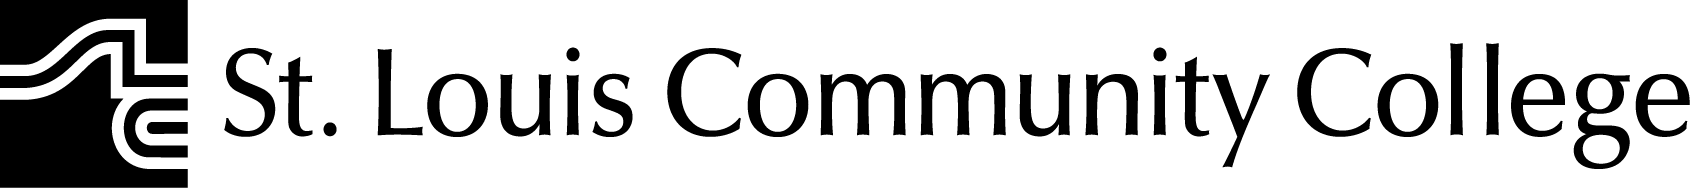 stlcc black logo